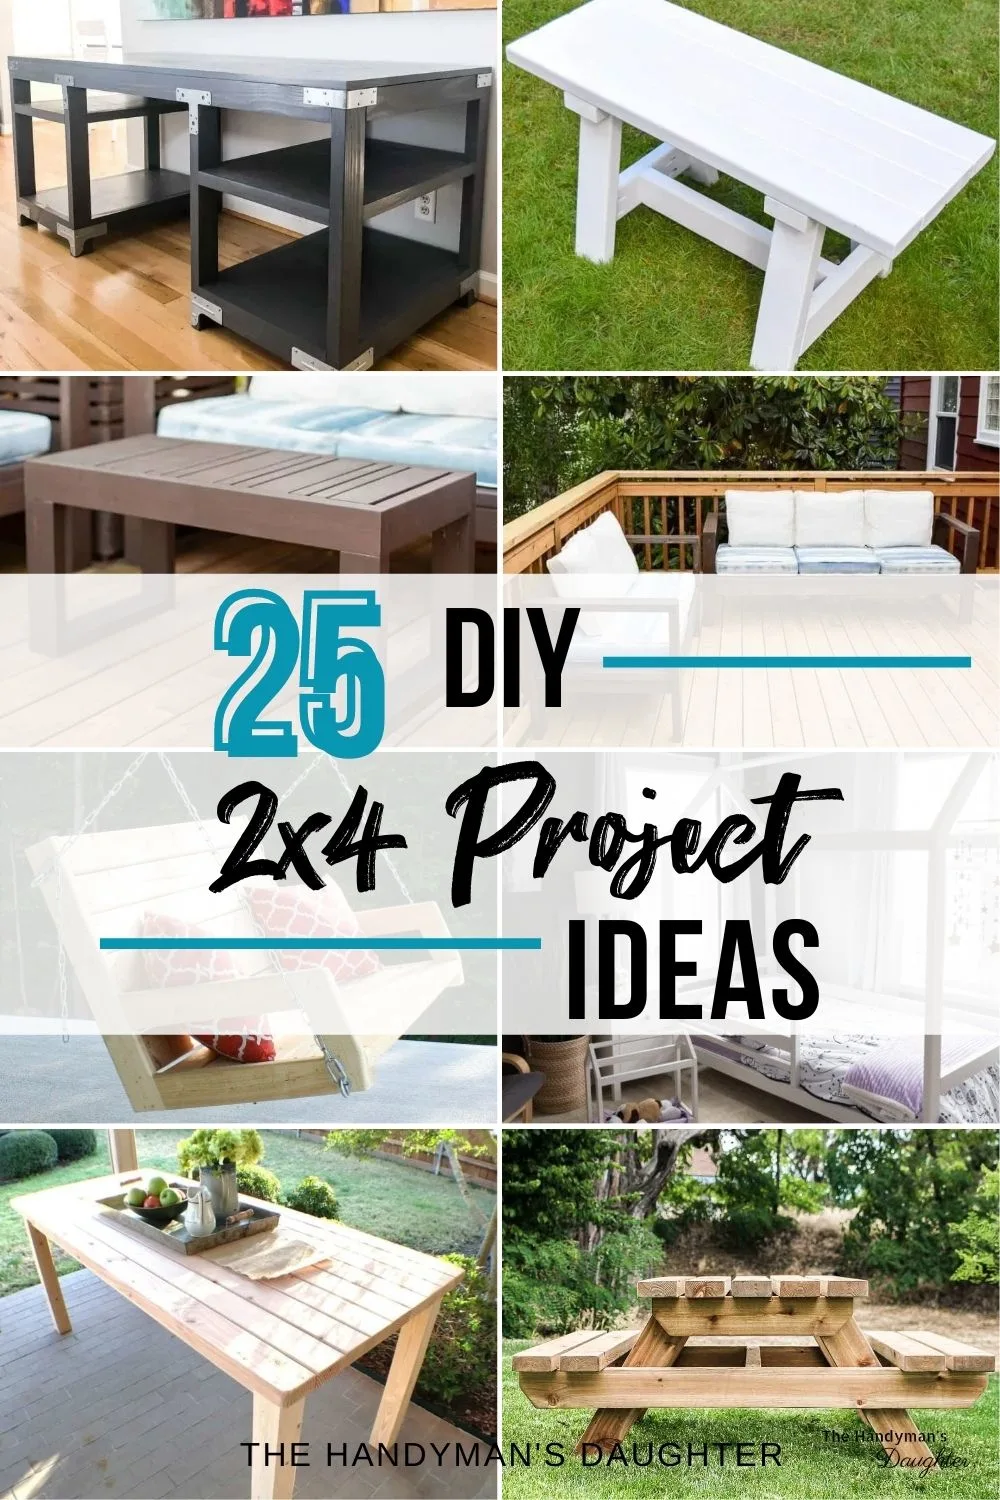 25 Cheap Easy Diy 2x4 Project Ideas